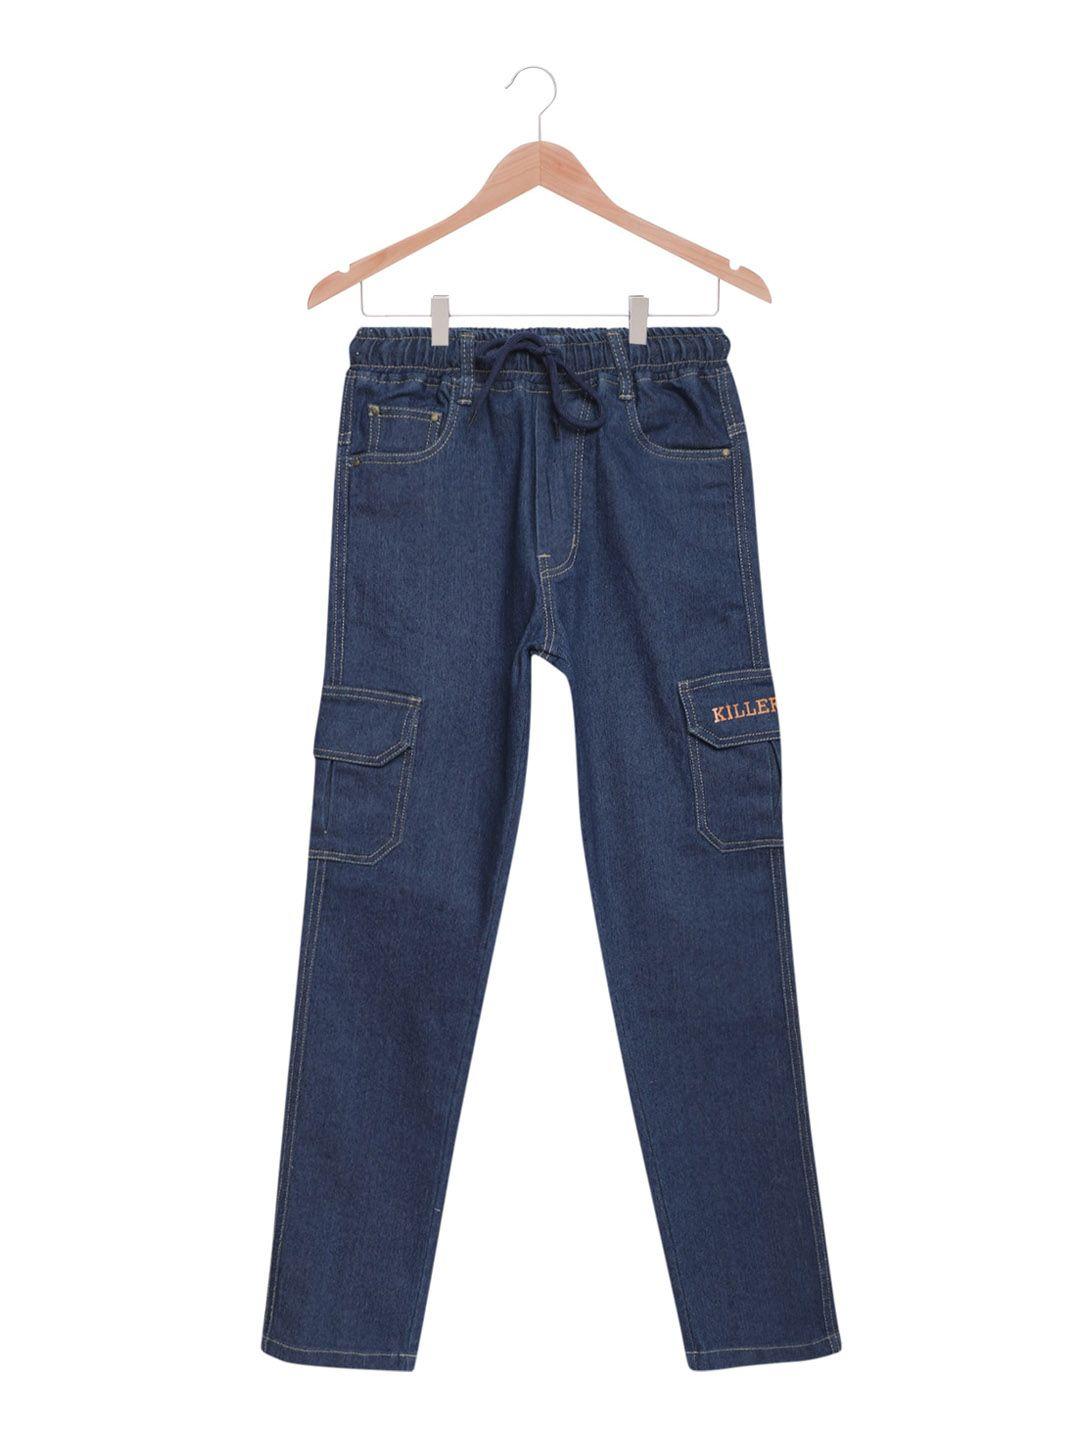 killer-boys-mid-rise-stretchable-cotton-jeans